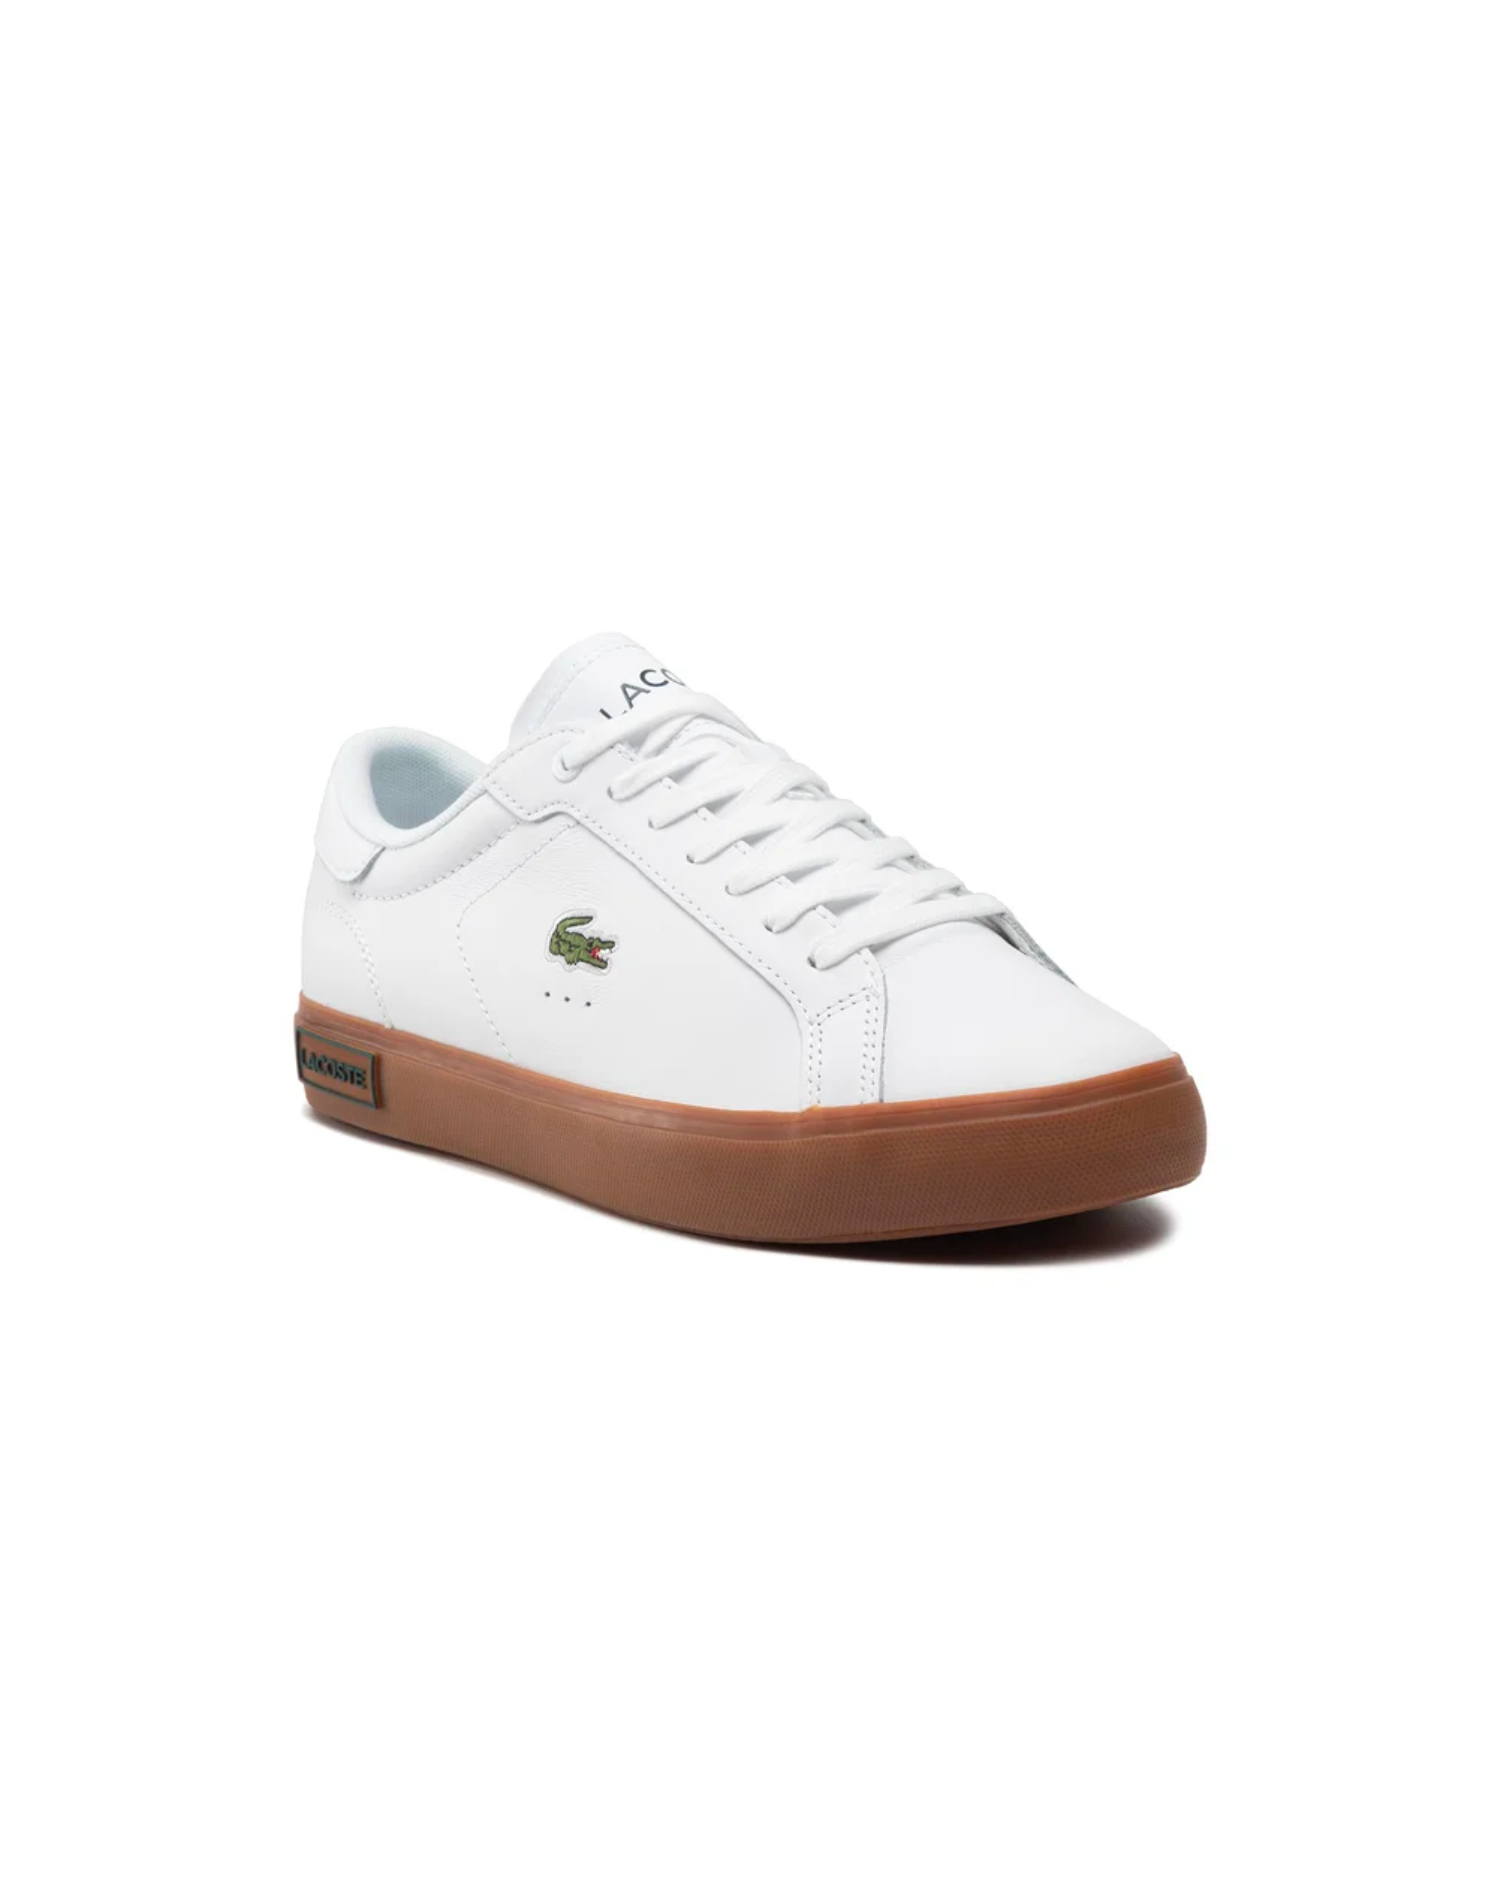 Lacoste - Powercourt 0722 1SMA Shoe - White/Gum